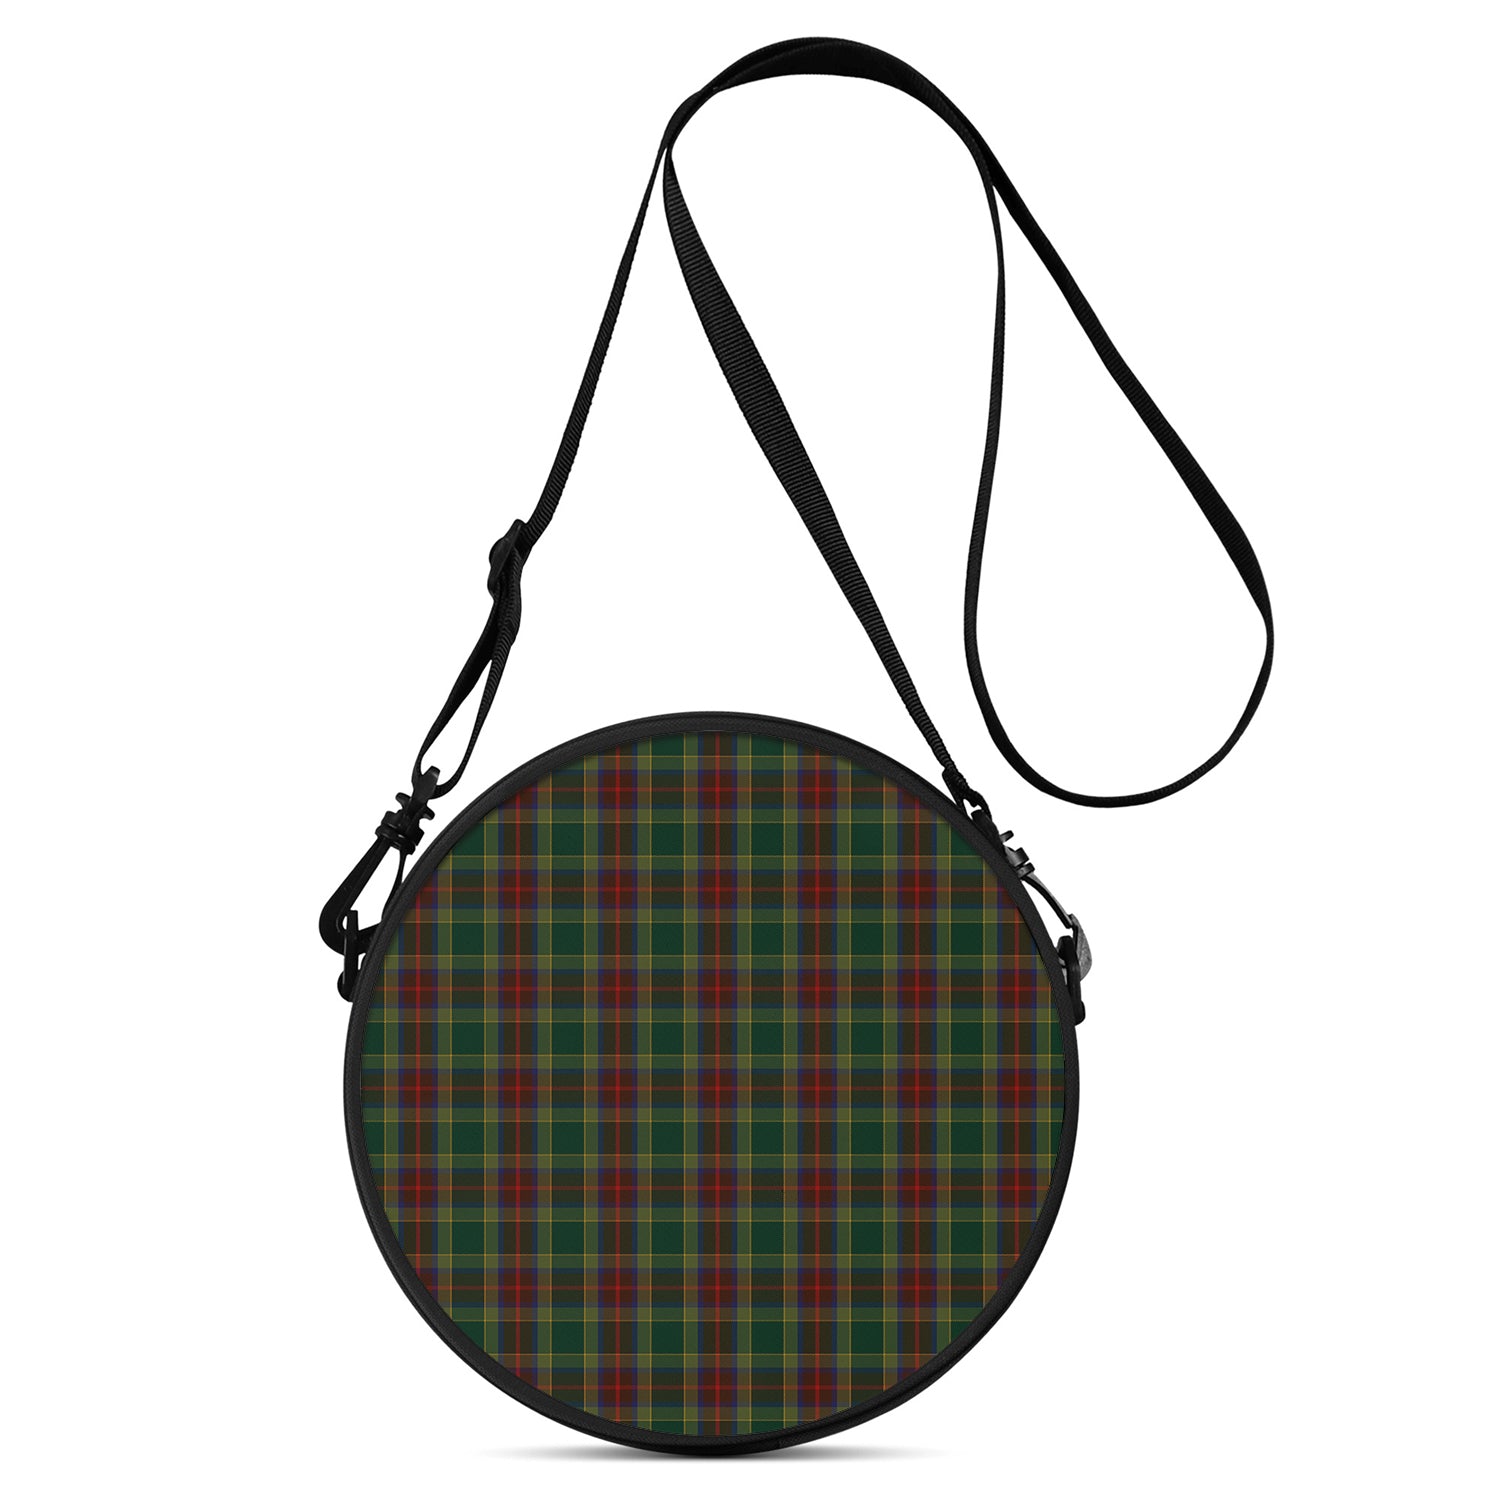 waterford-tartan-round-satchel-bags